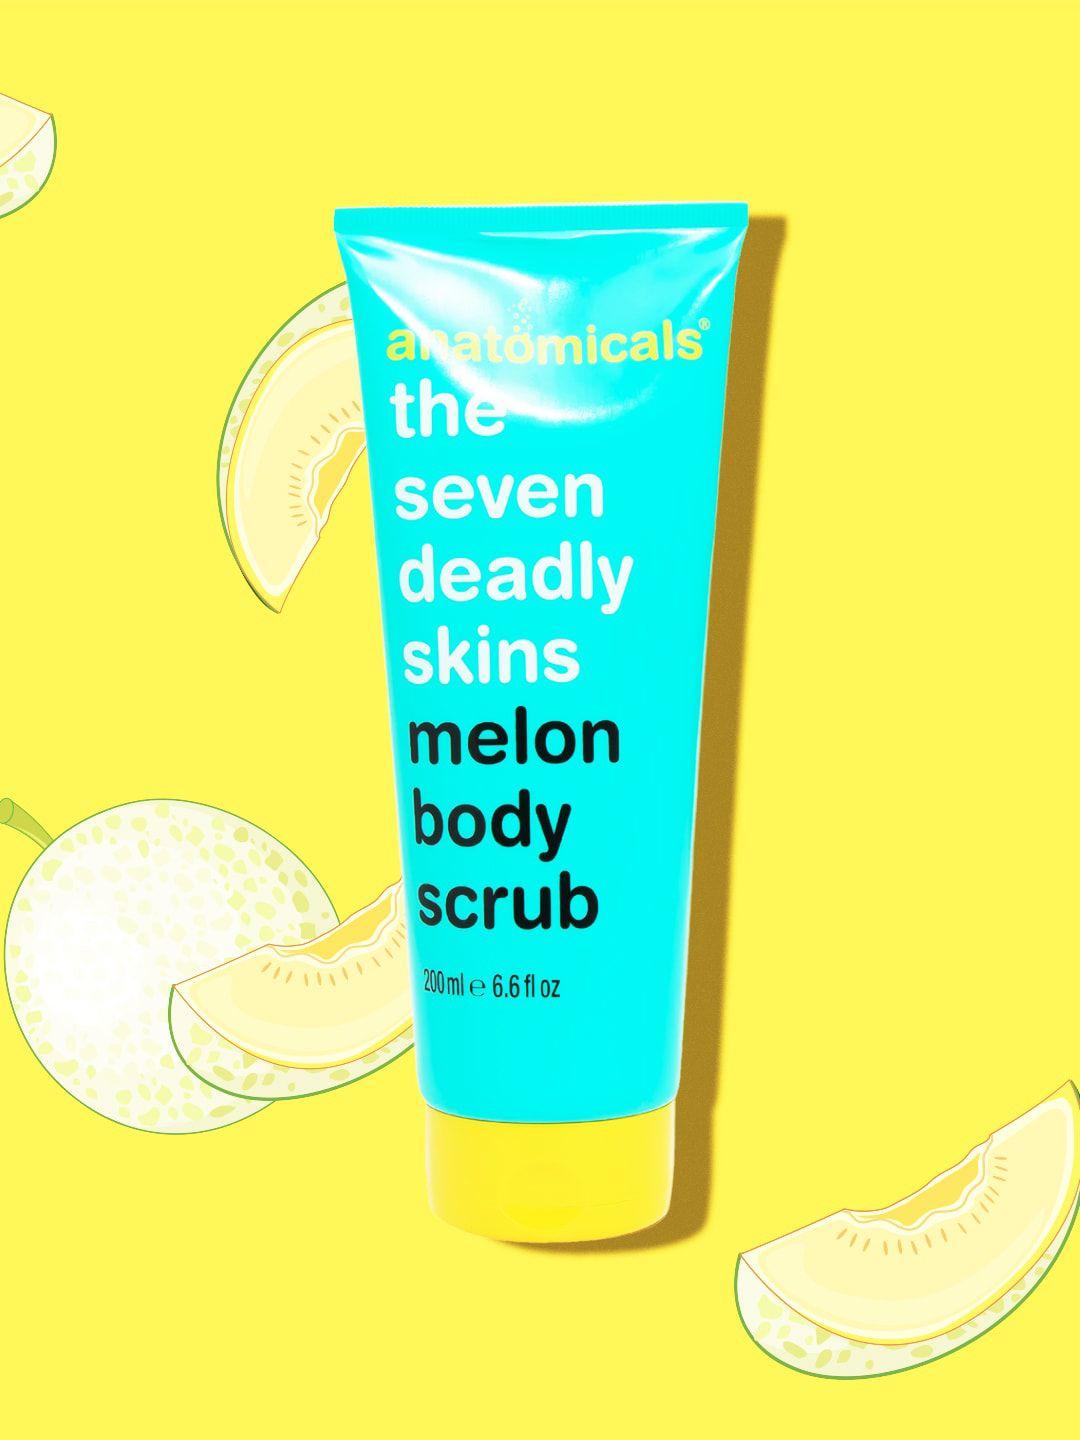 anatomicals the seven deadly skins melon body scrub - 200 ml